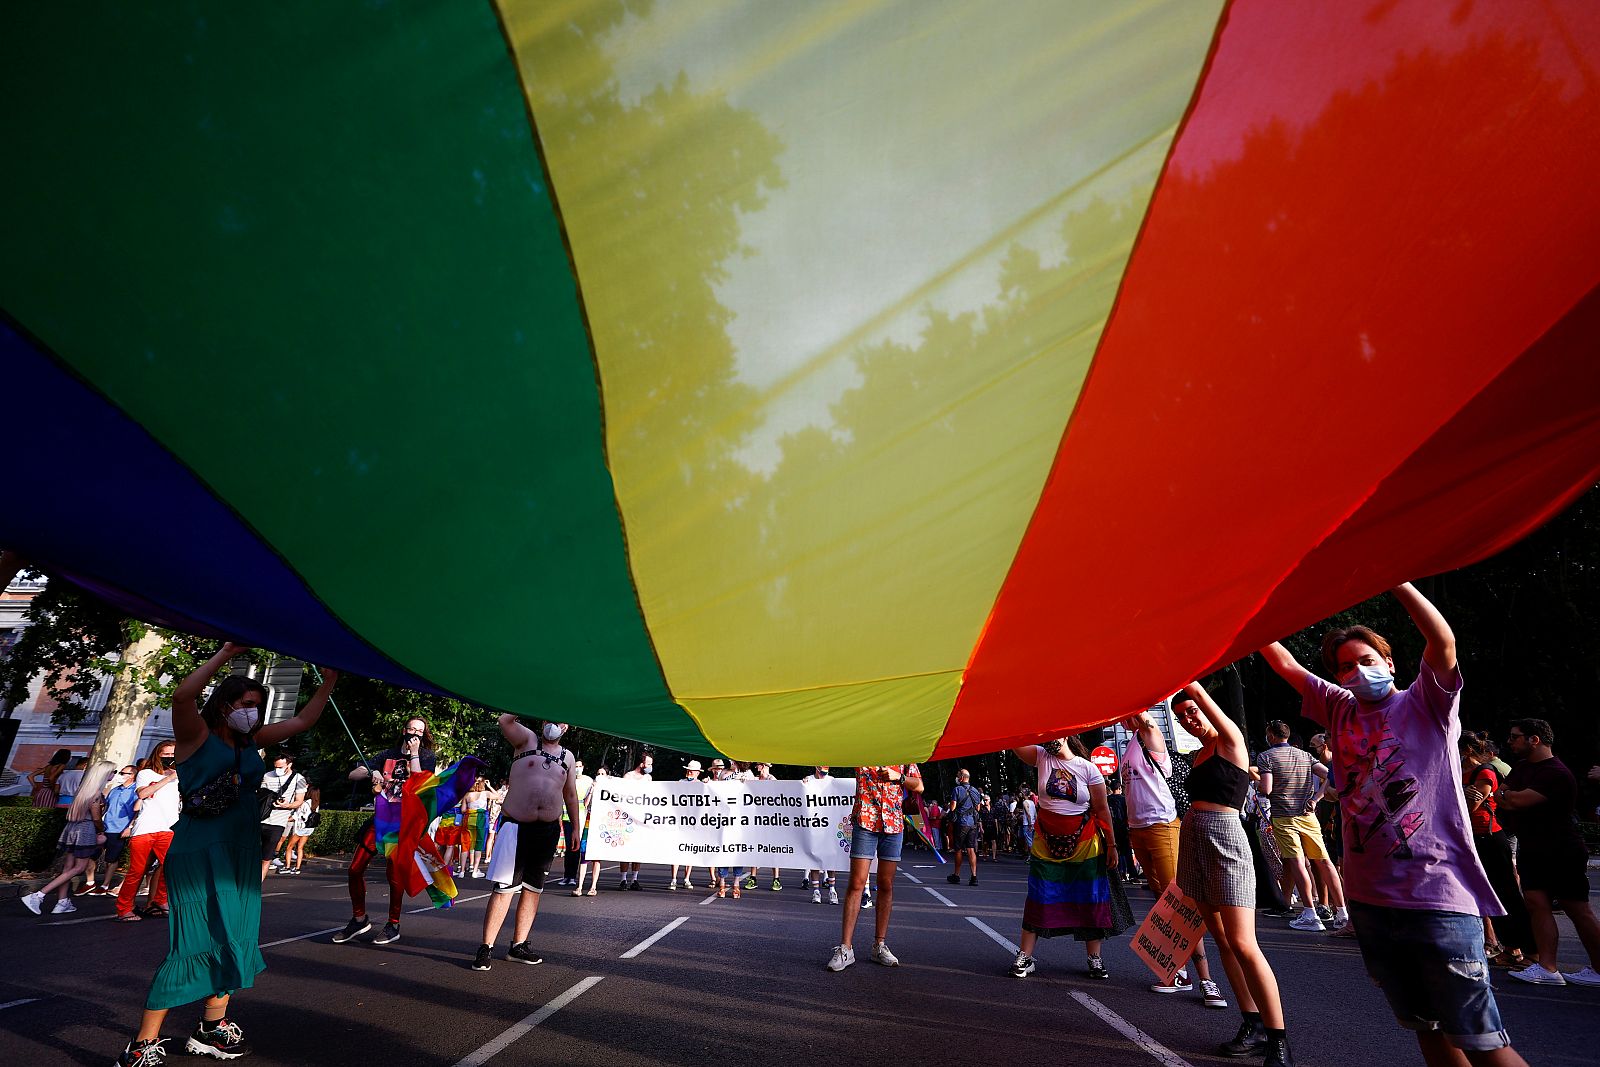 Participantes en la marcha del Orgullo LGTBI sostienen una enorme bandera del Orgullo.